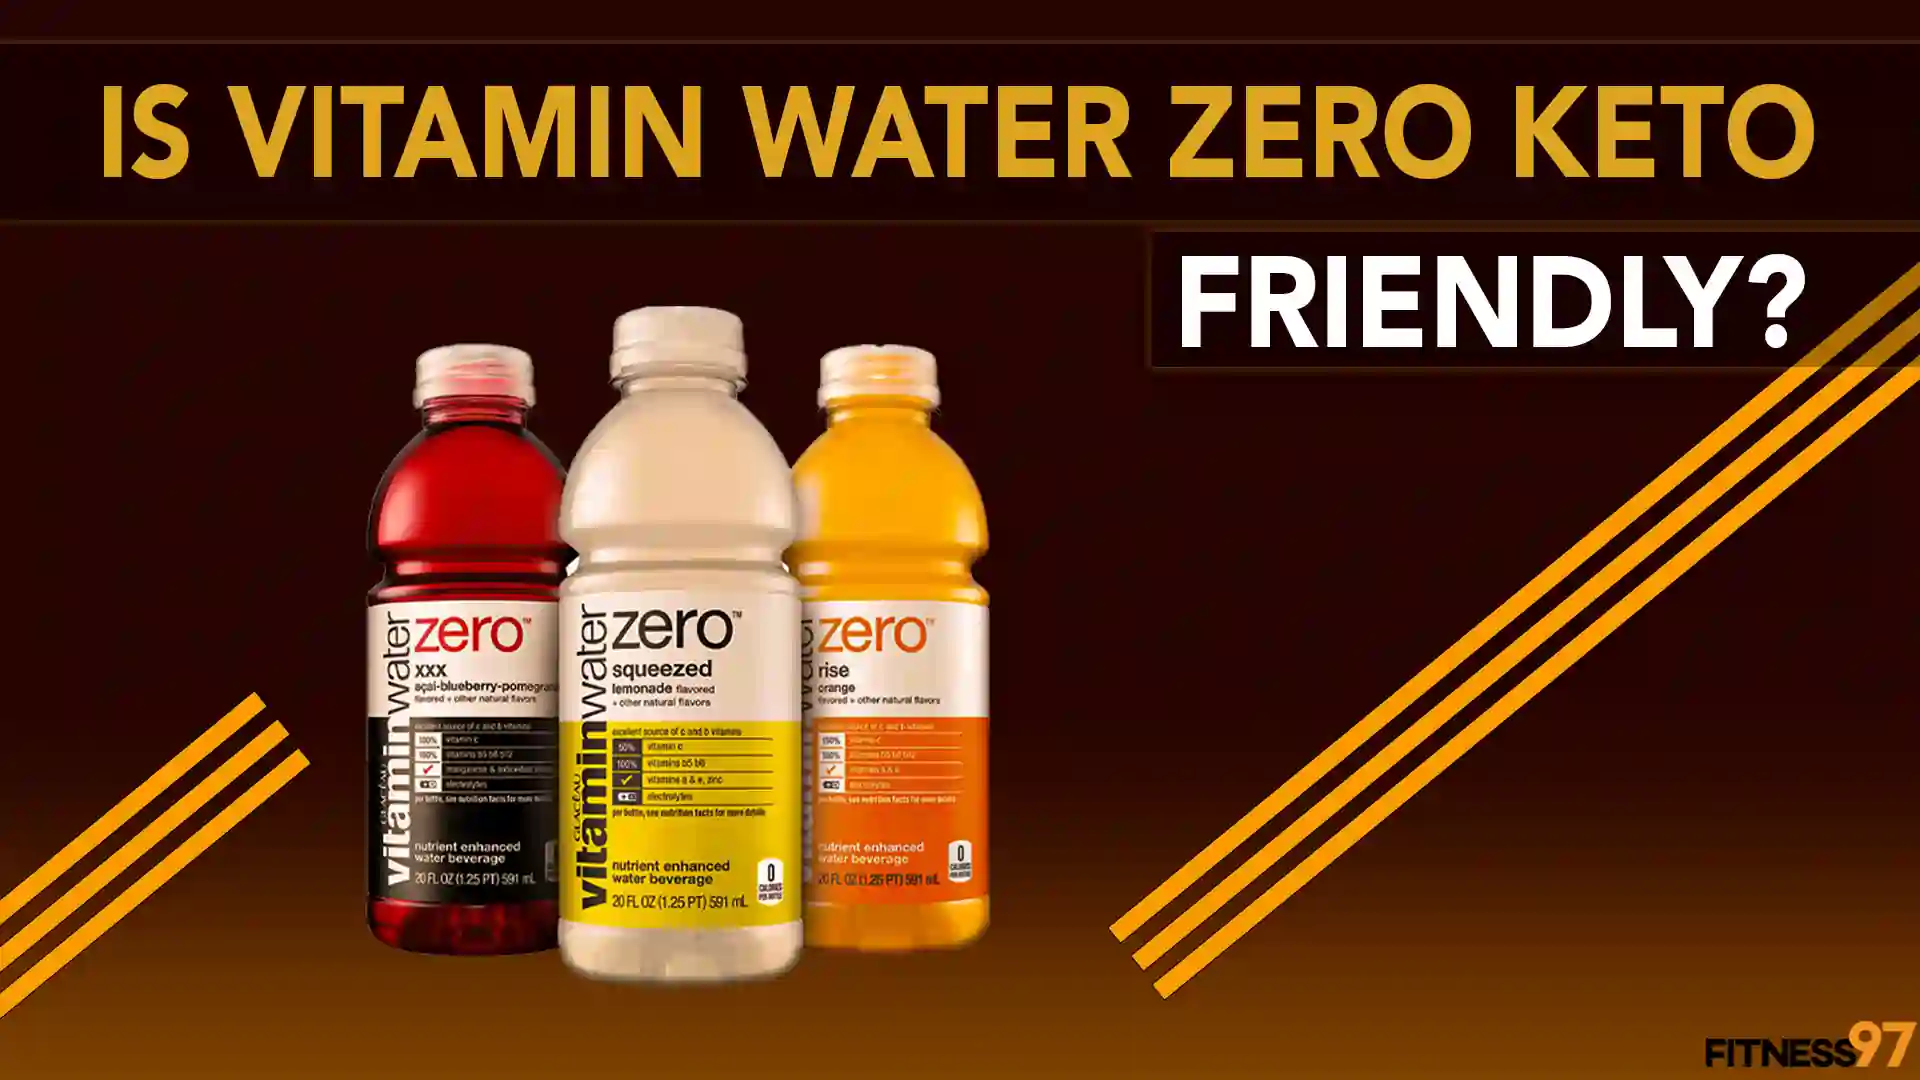 Vitamin Water Zero Keto Friendly